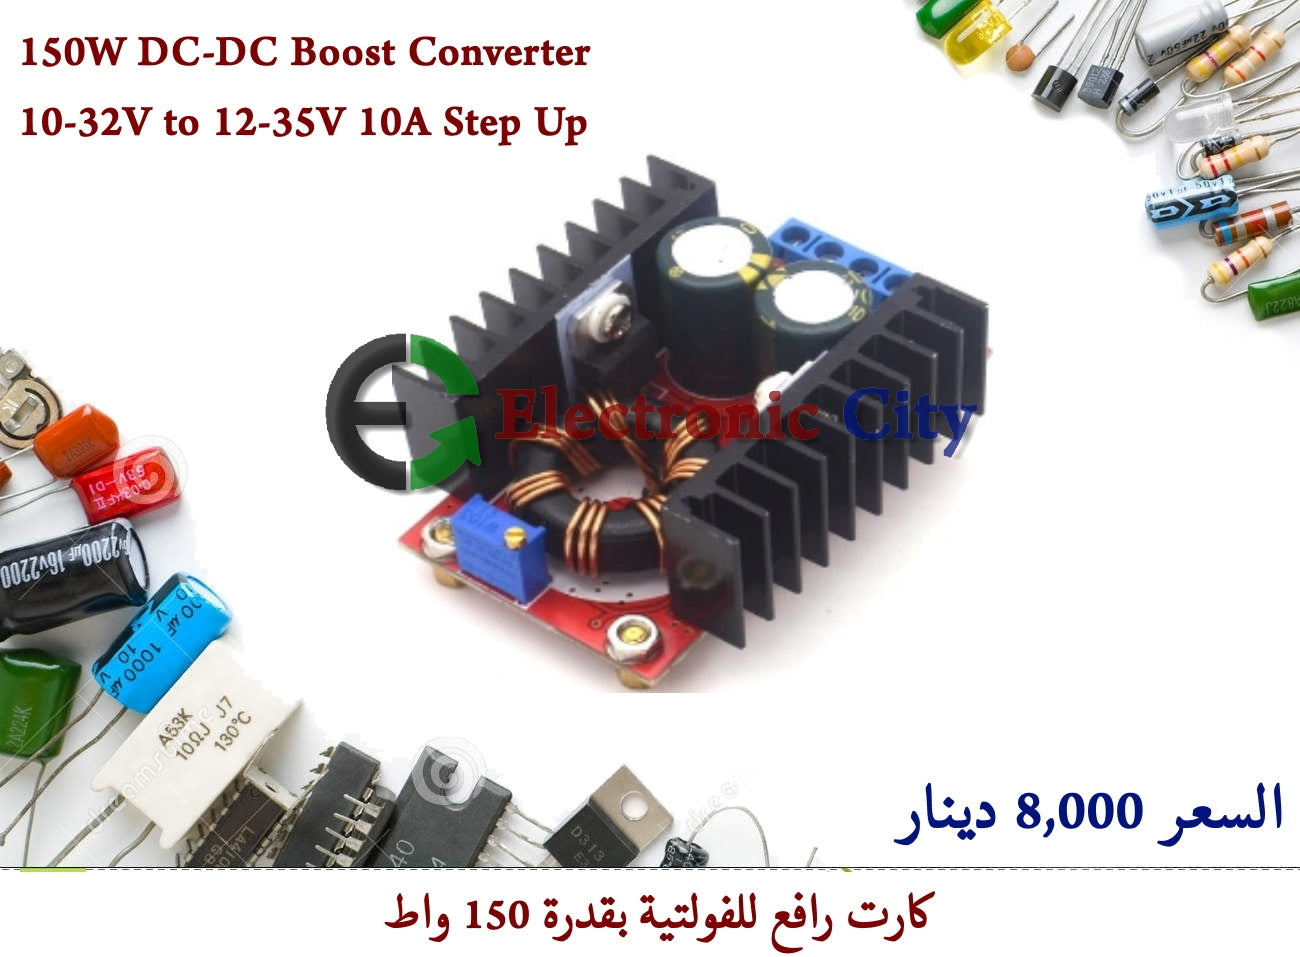 150W DC-DC Boost Converter 10-32V to 12-35V 10A Step Up #H1 010166